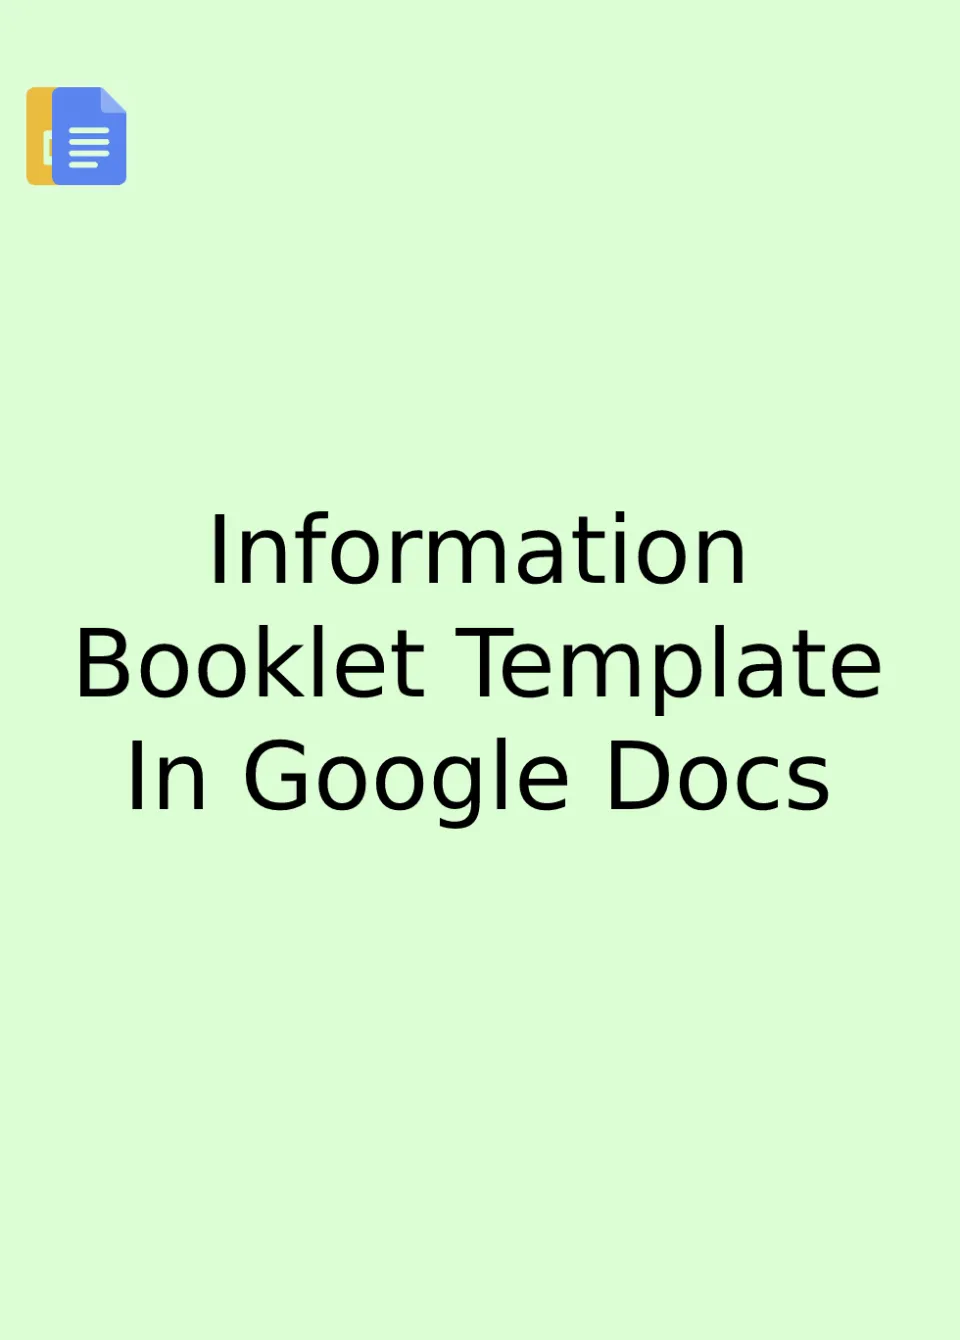 Information Booklet Template Google Docs